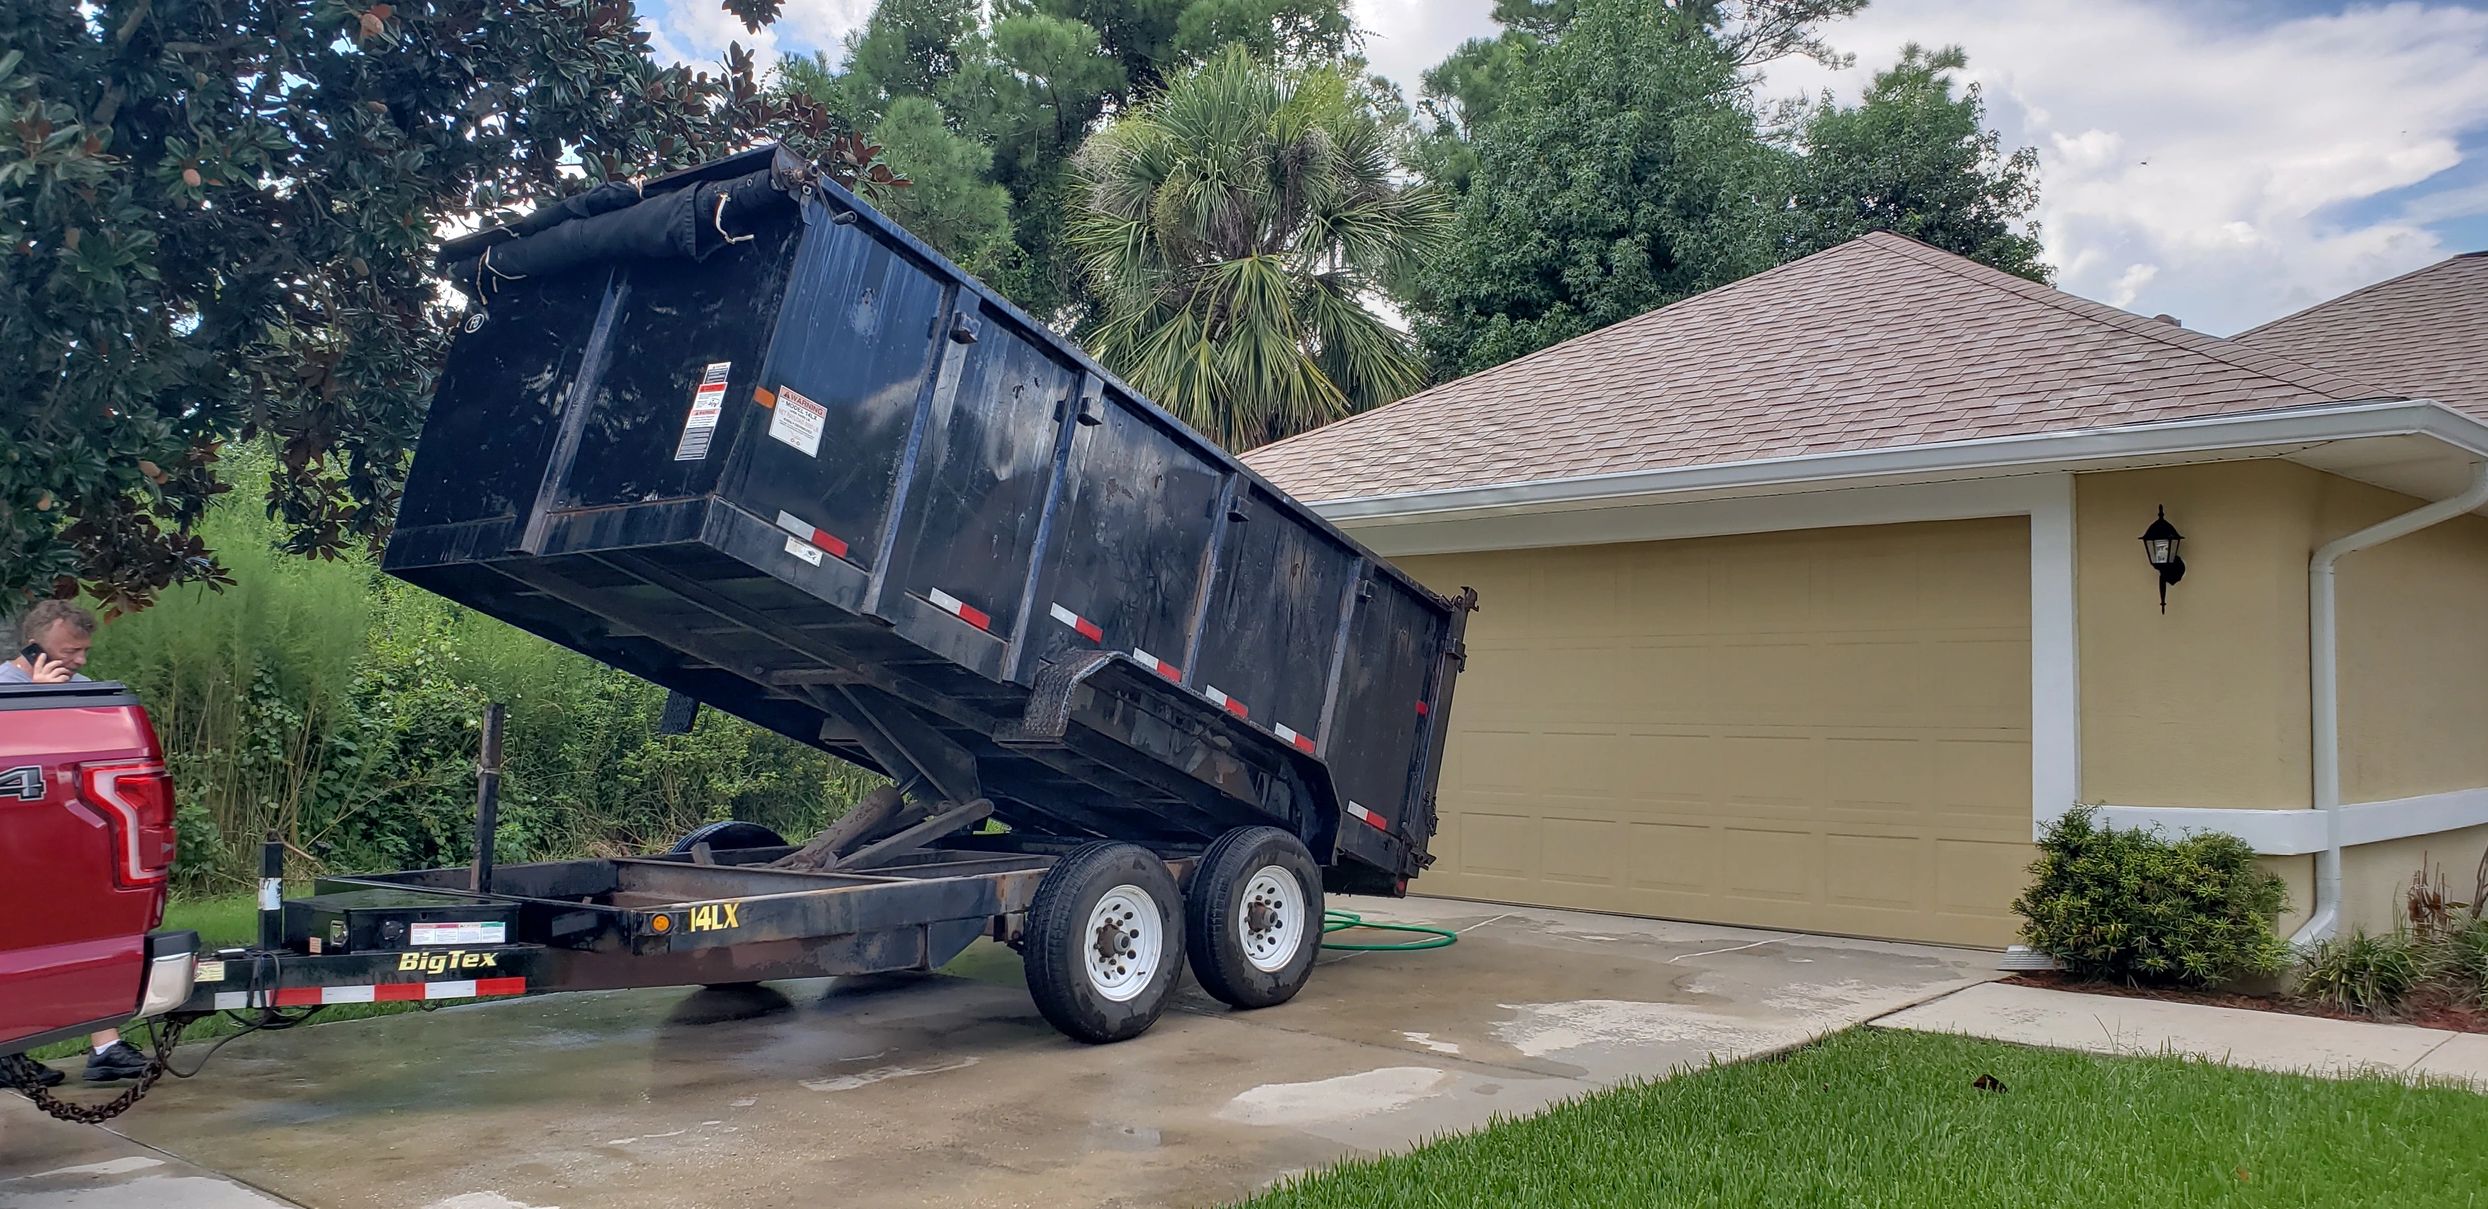 Dumpster Rentals Palm Coast Florida. Dumpster On Wheels. Book Your Dumpster Rental Now.